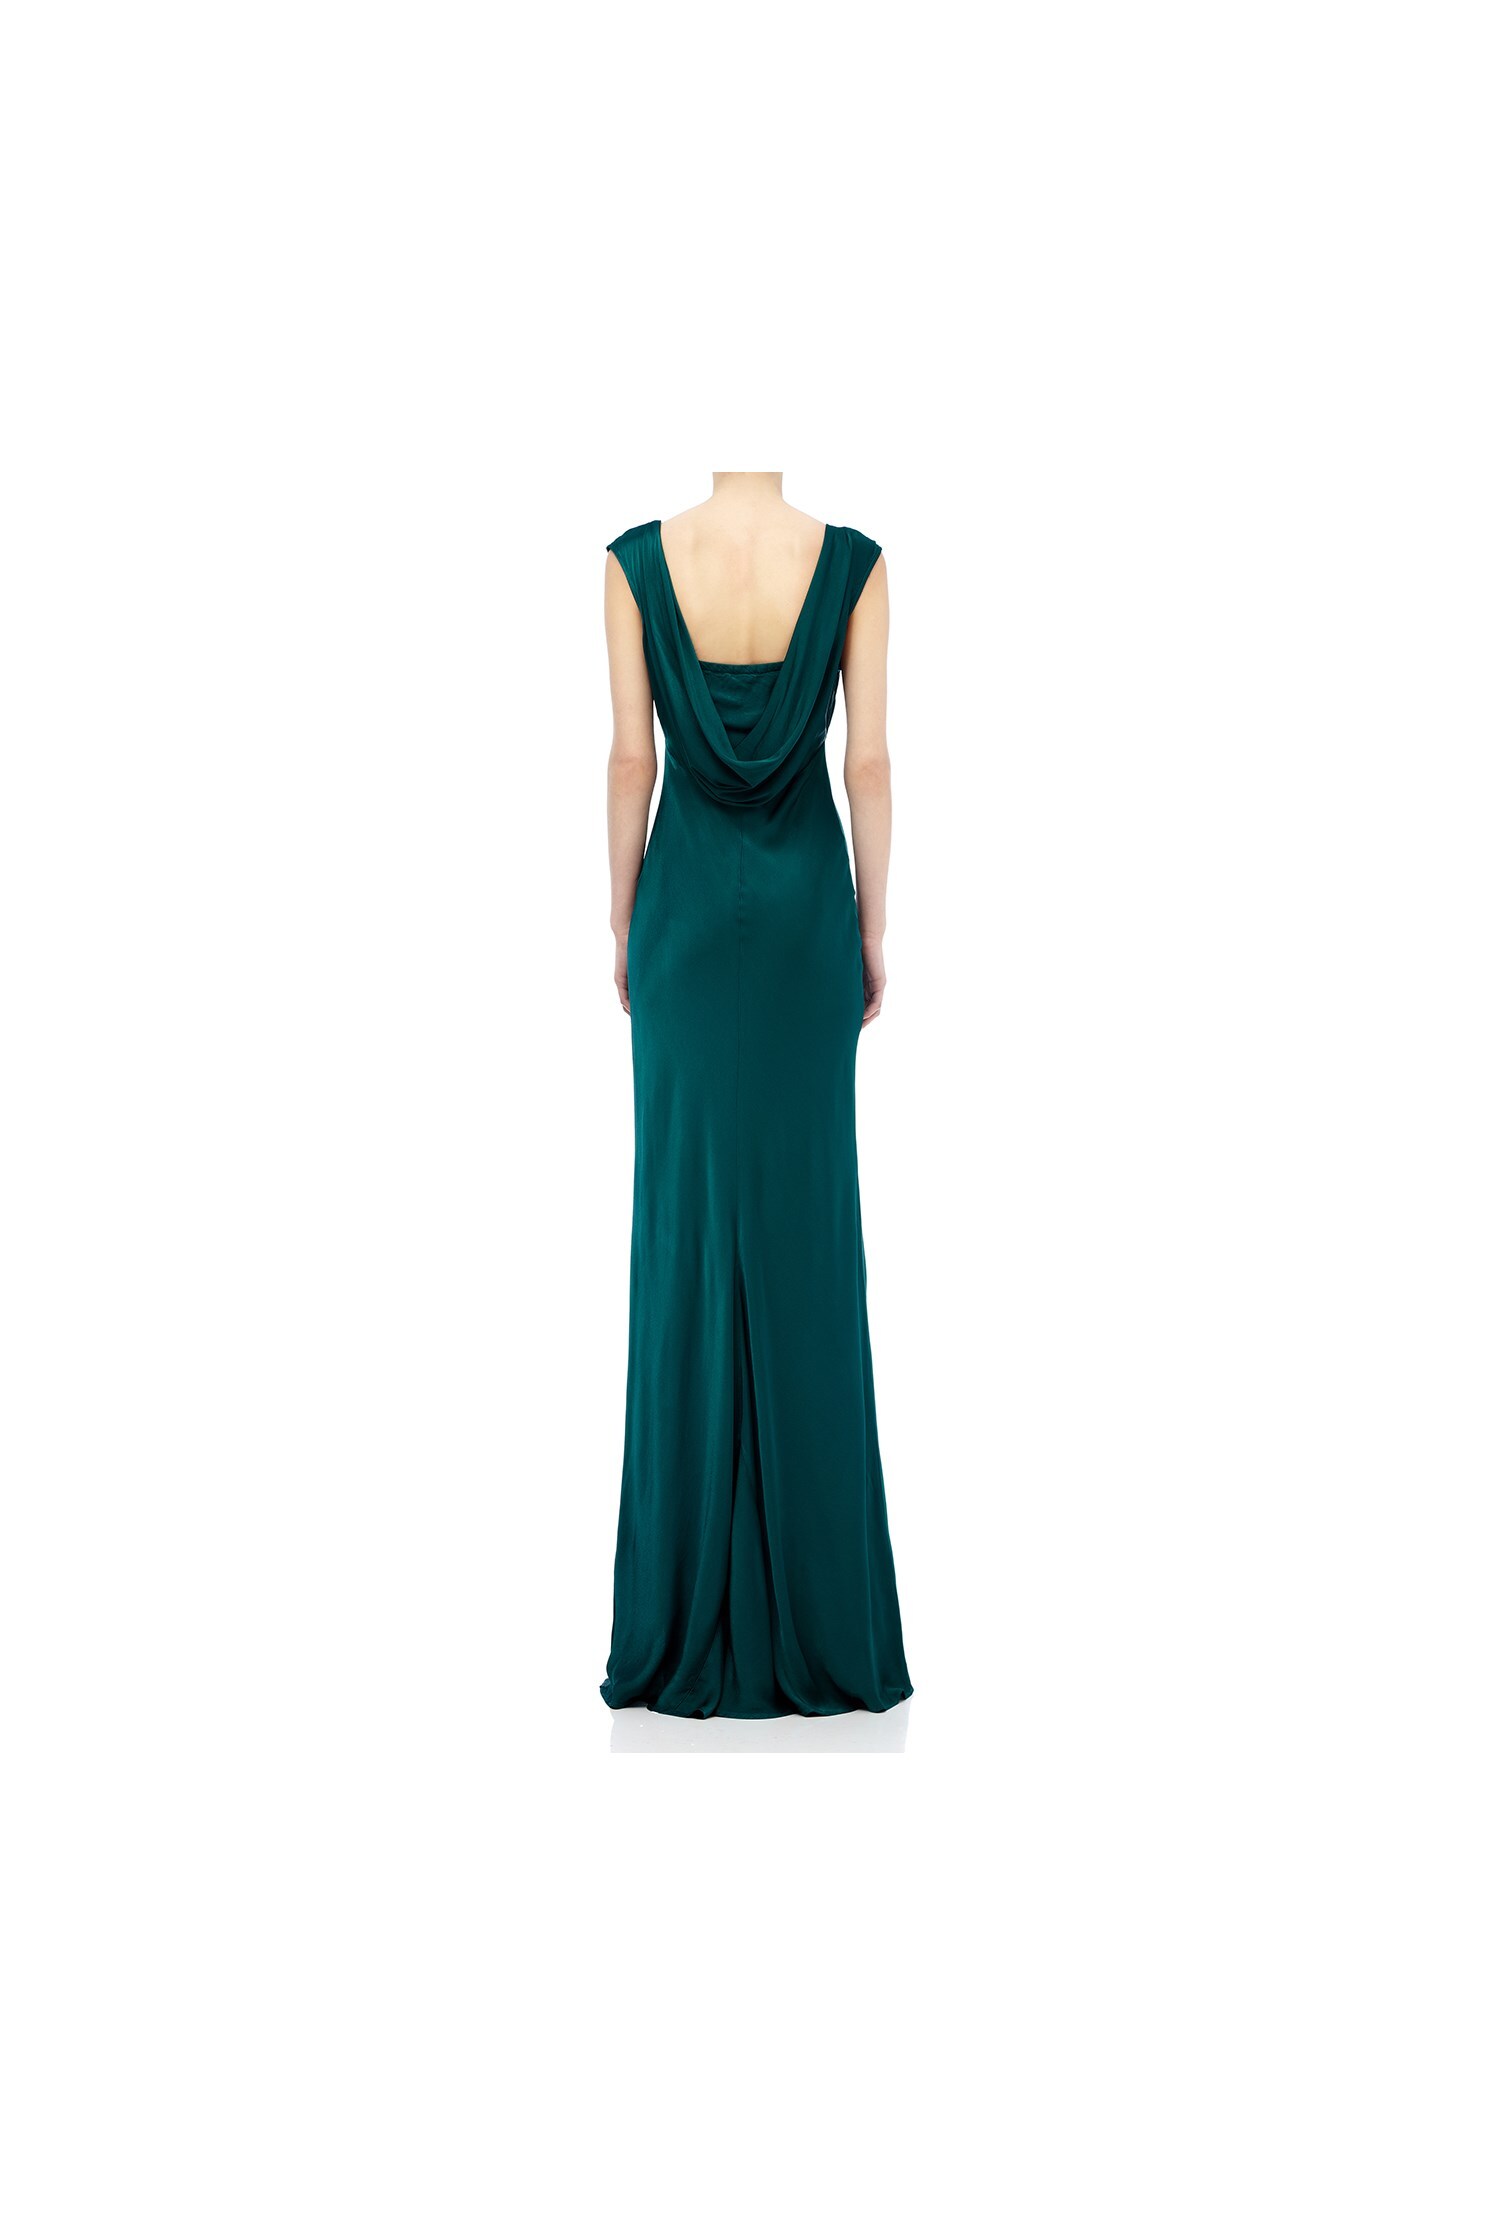 GHOST Salma dress emerald sea - Harvey 